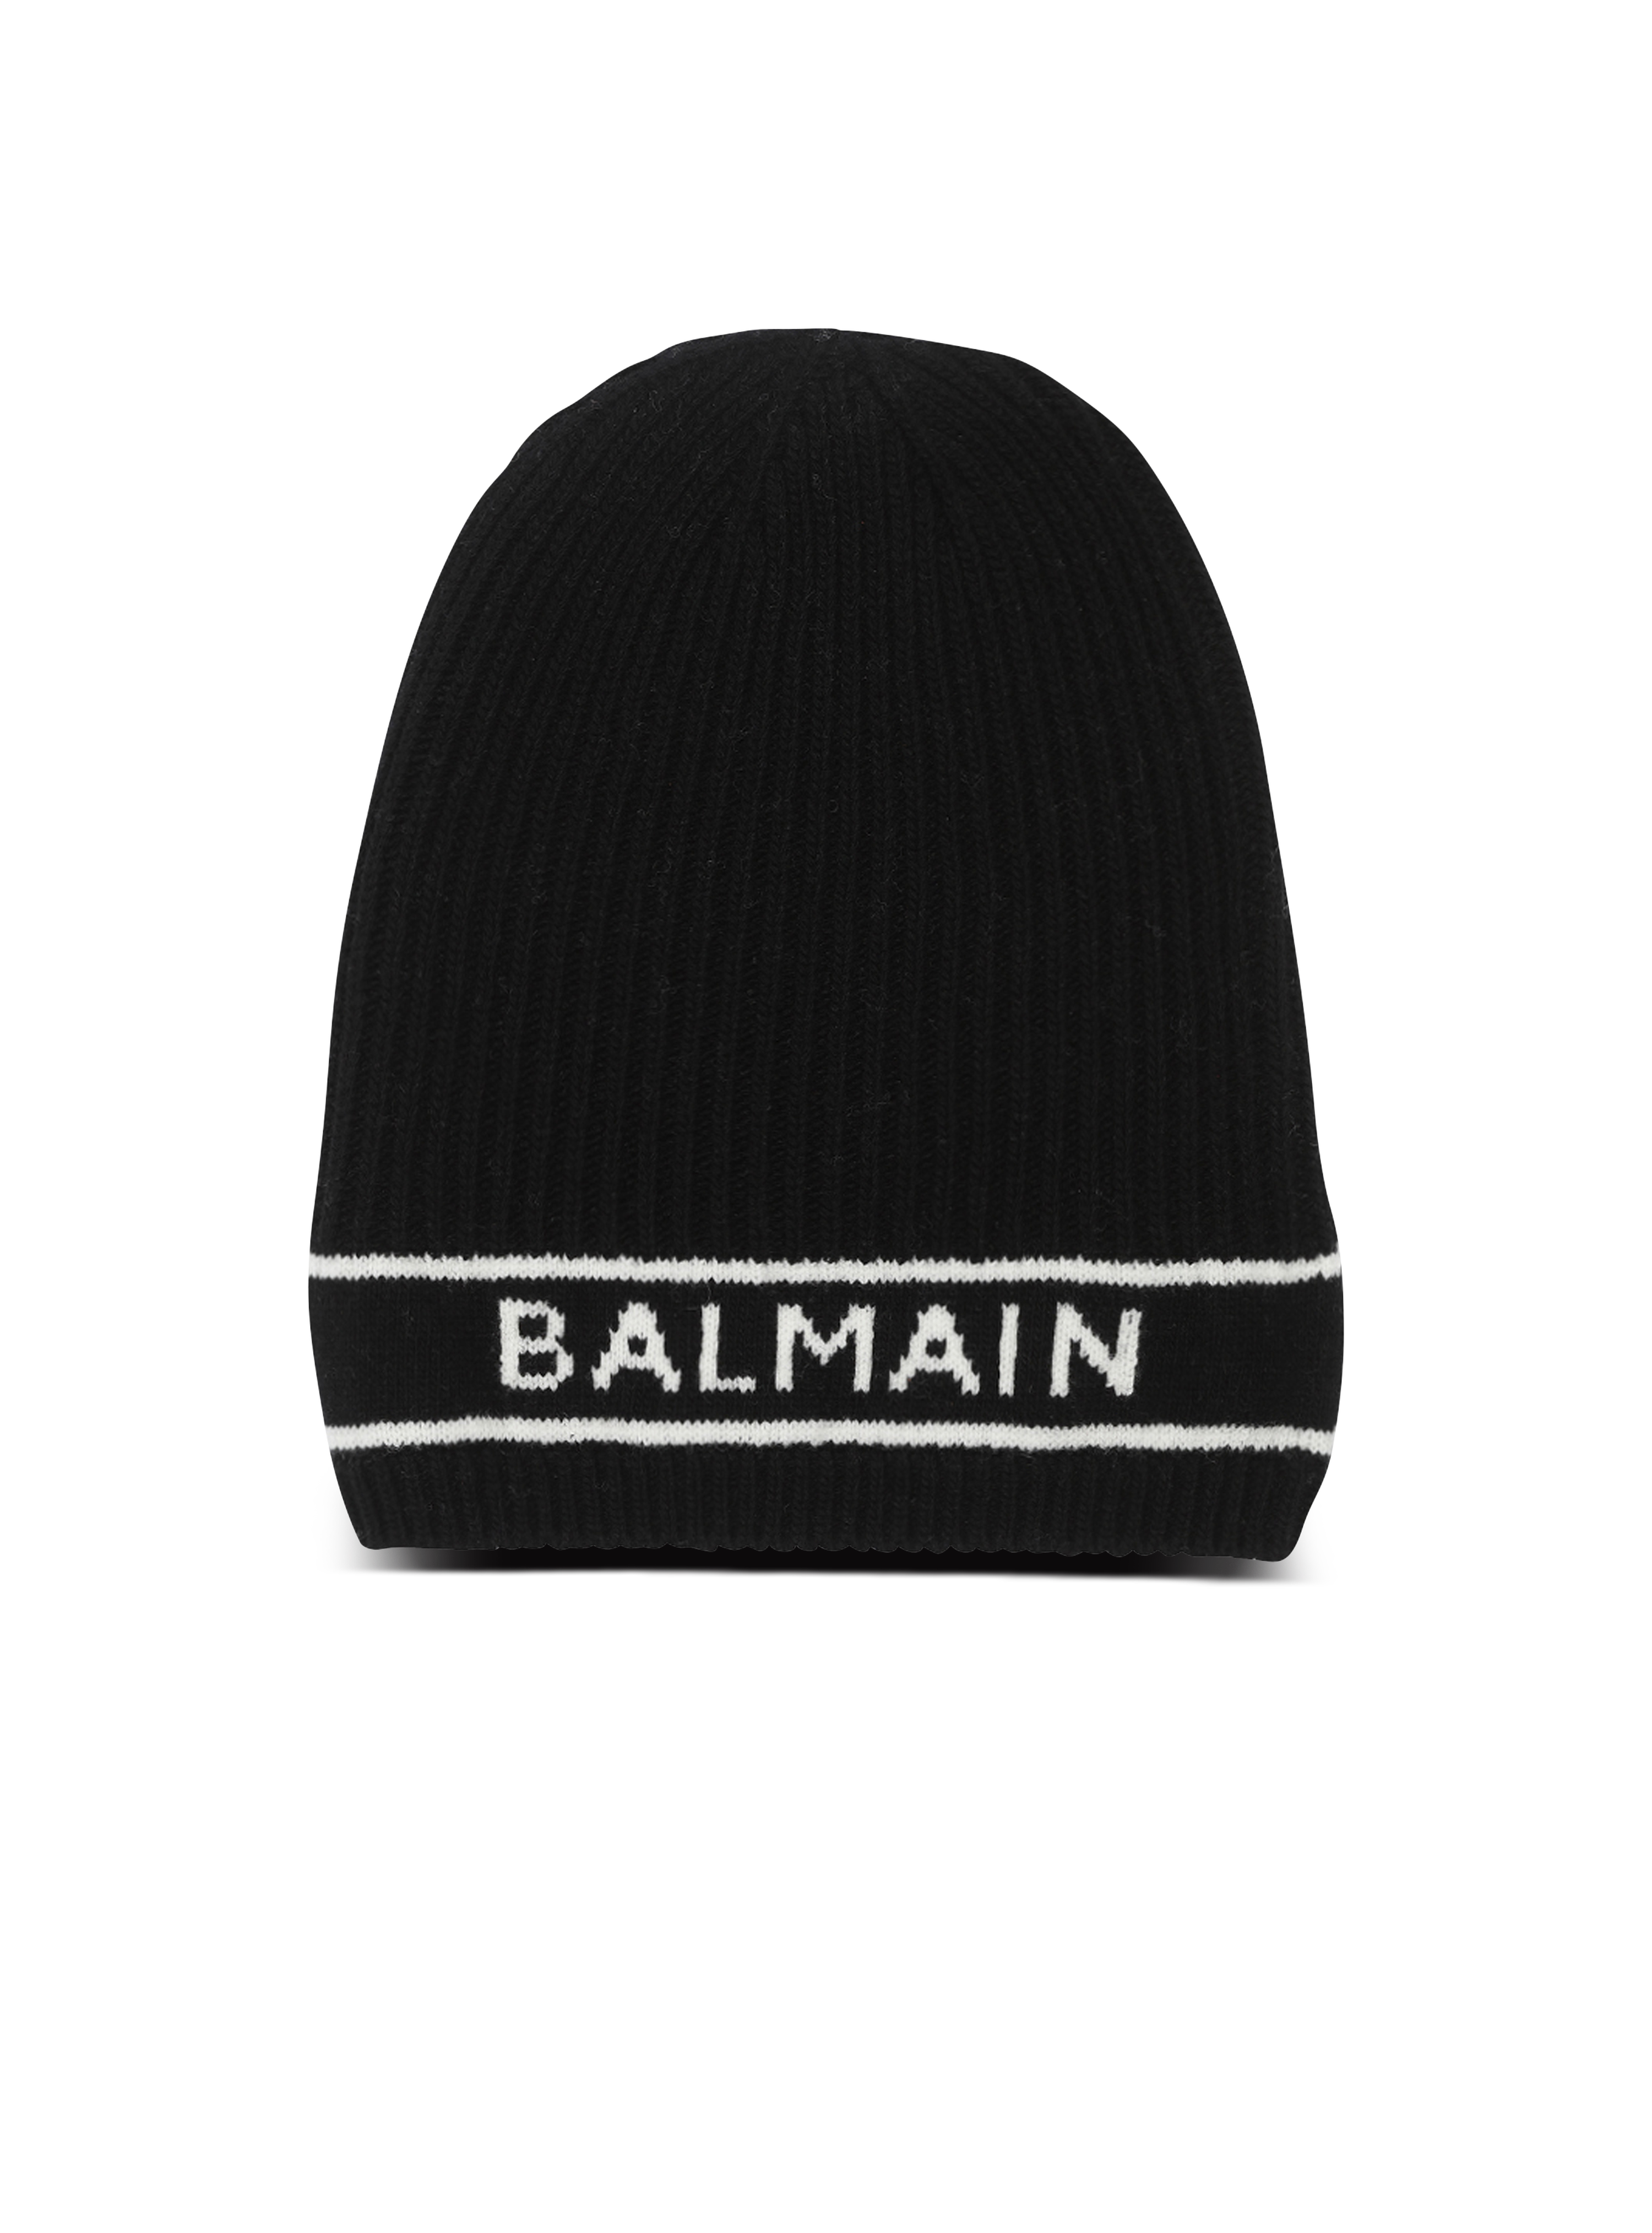 Wool beanie with embroidered Balmain logo, black